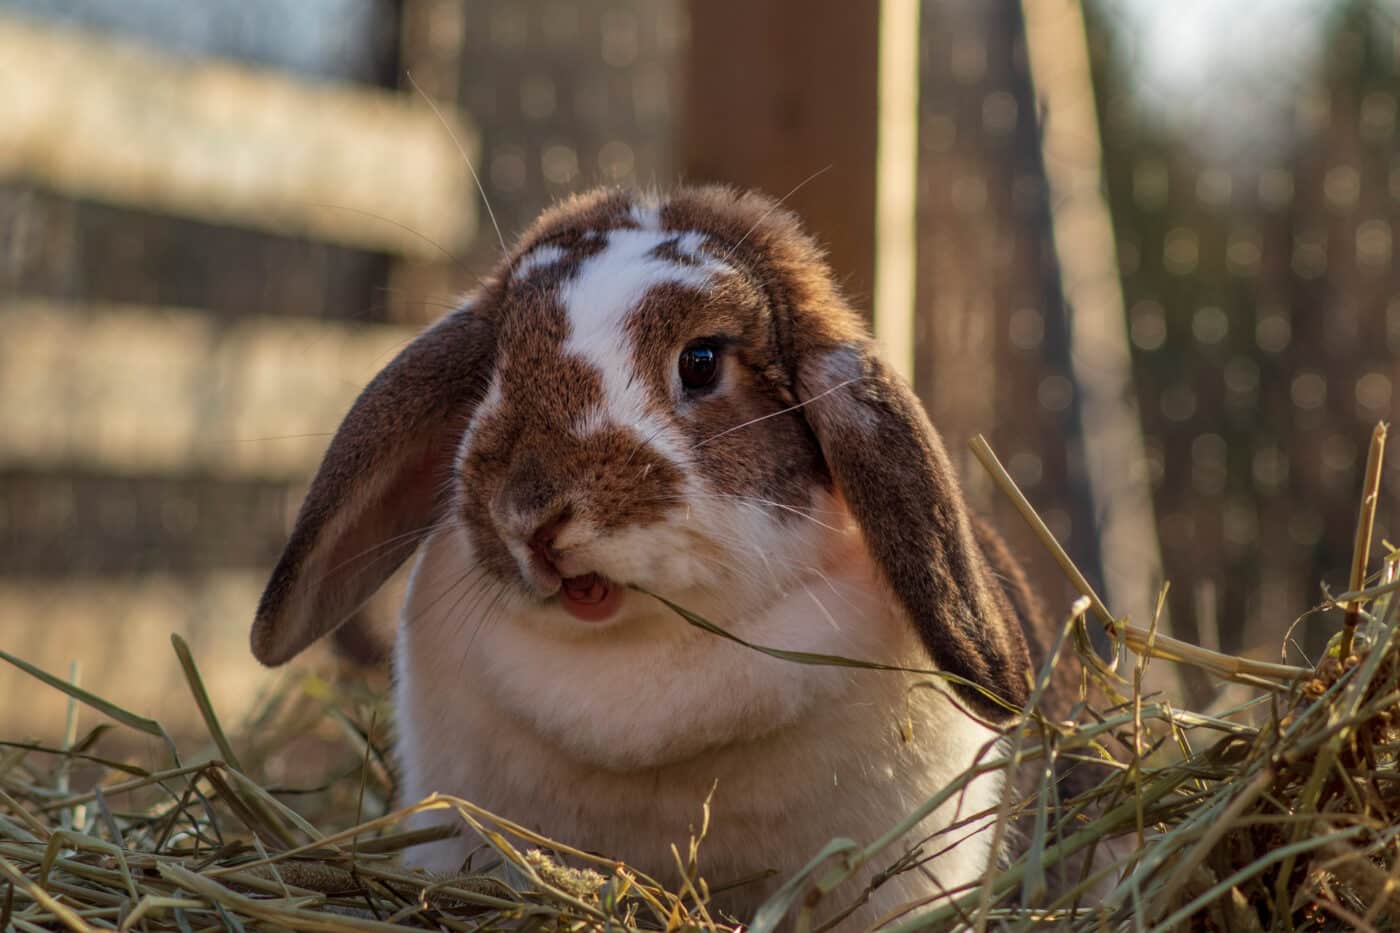 Bunny eating some organic oat hay. 